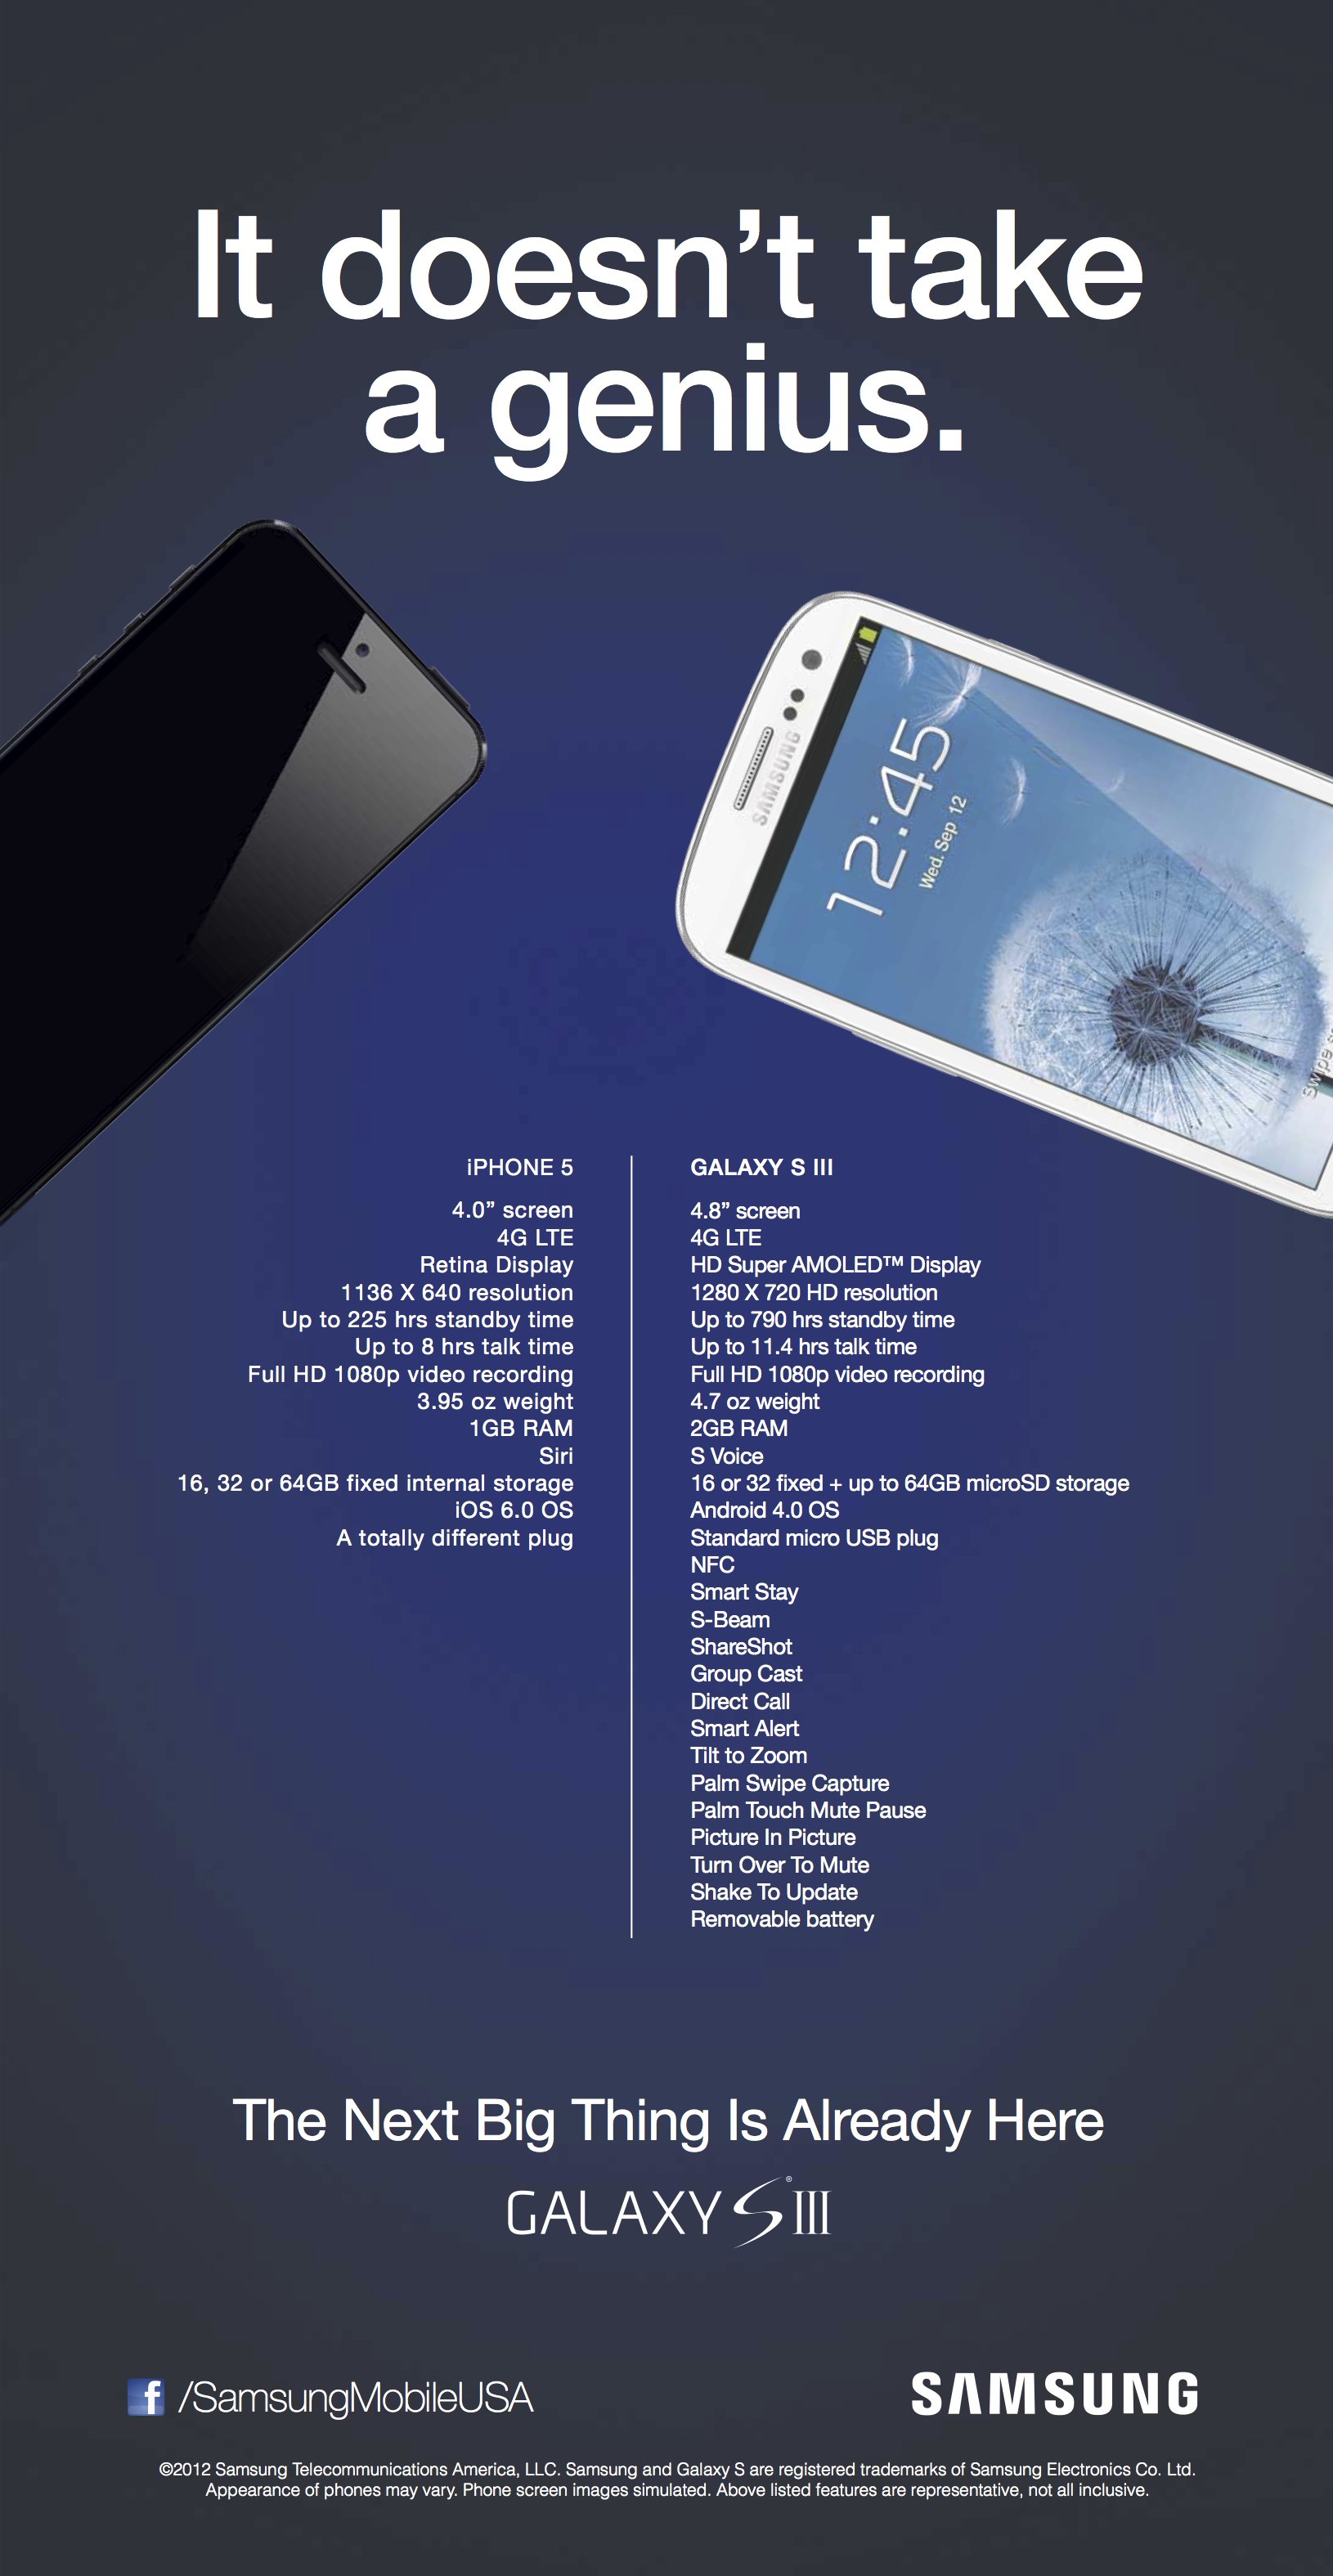 Samsung Will Publish This Misleading Anti-iPhone Ad Tomorrow